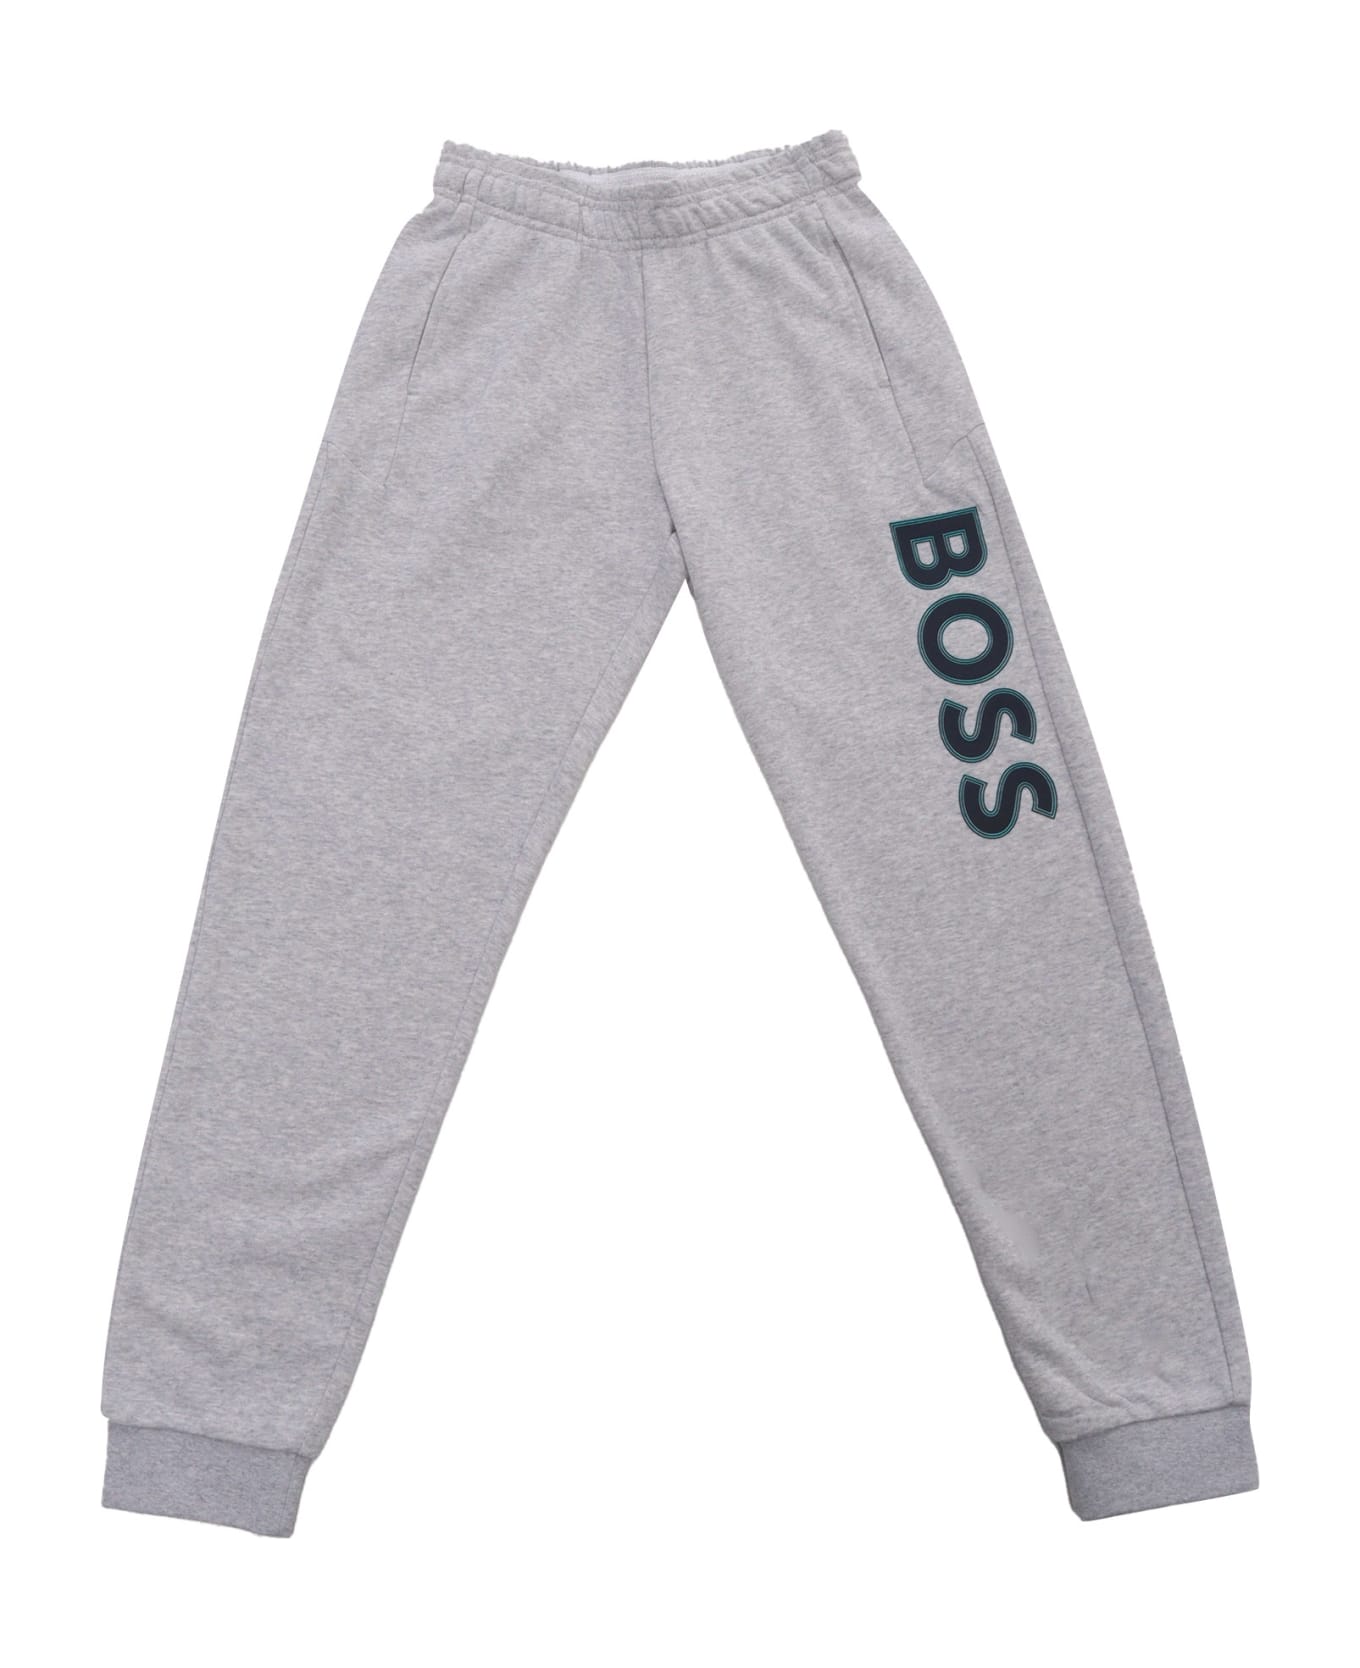 Hugo Boss Gray Jogging Pants - GREY